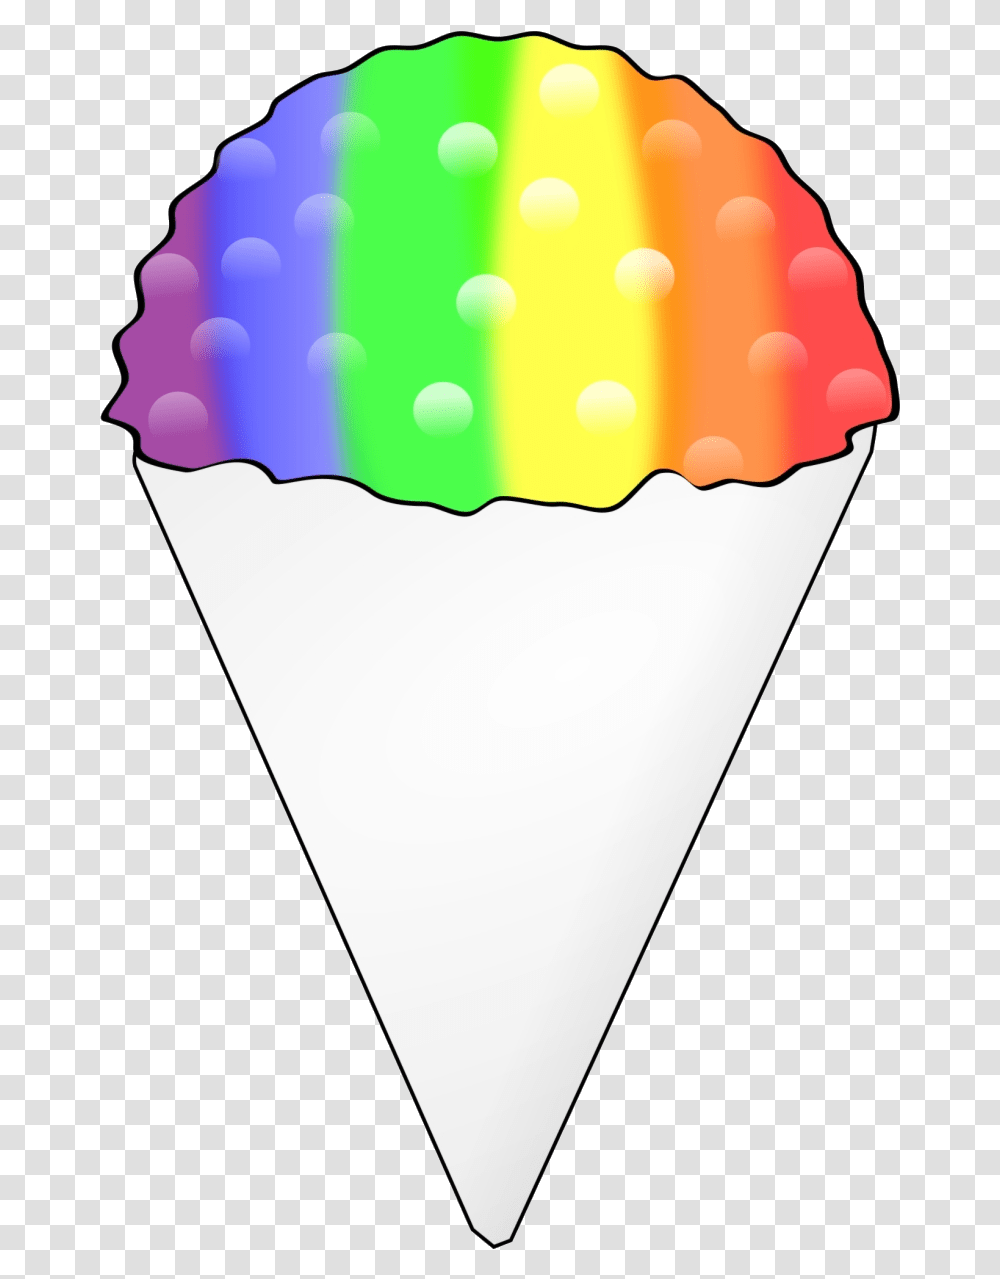 Foodlineice Cream Cone Shaved Ice Clip Art, Dessert, Creme, Triangle, Plectrum Transparent Png